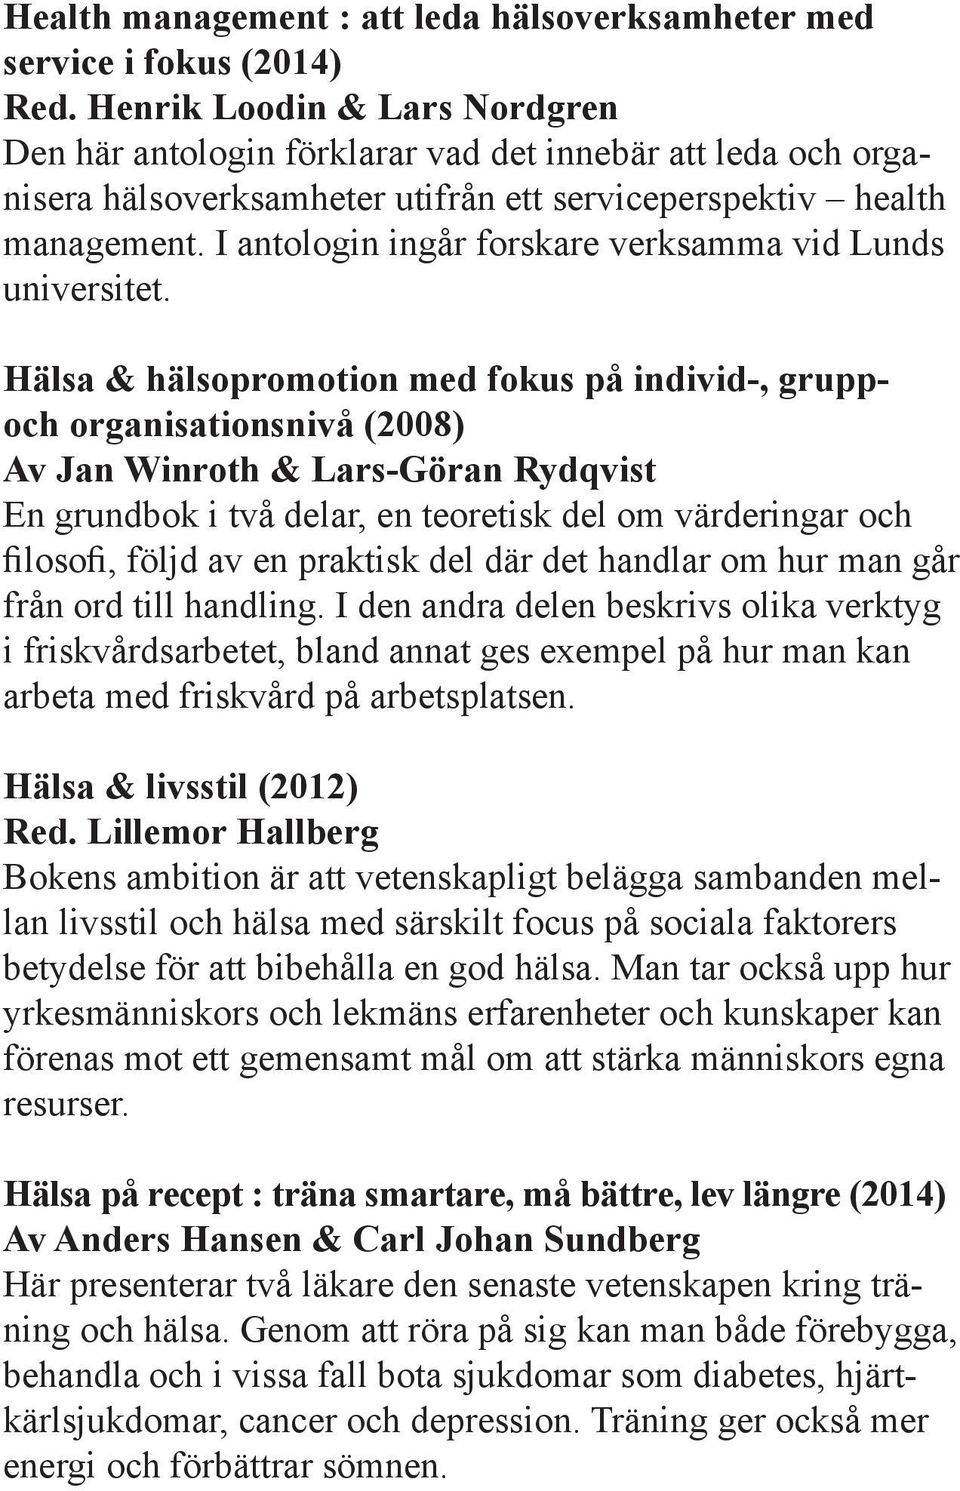 I antologin ingår forskare verksamma vid Lunds universitet.